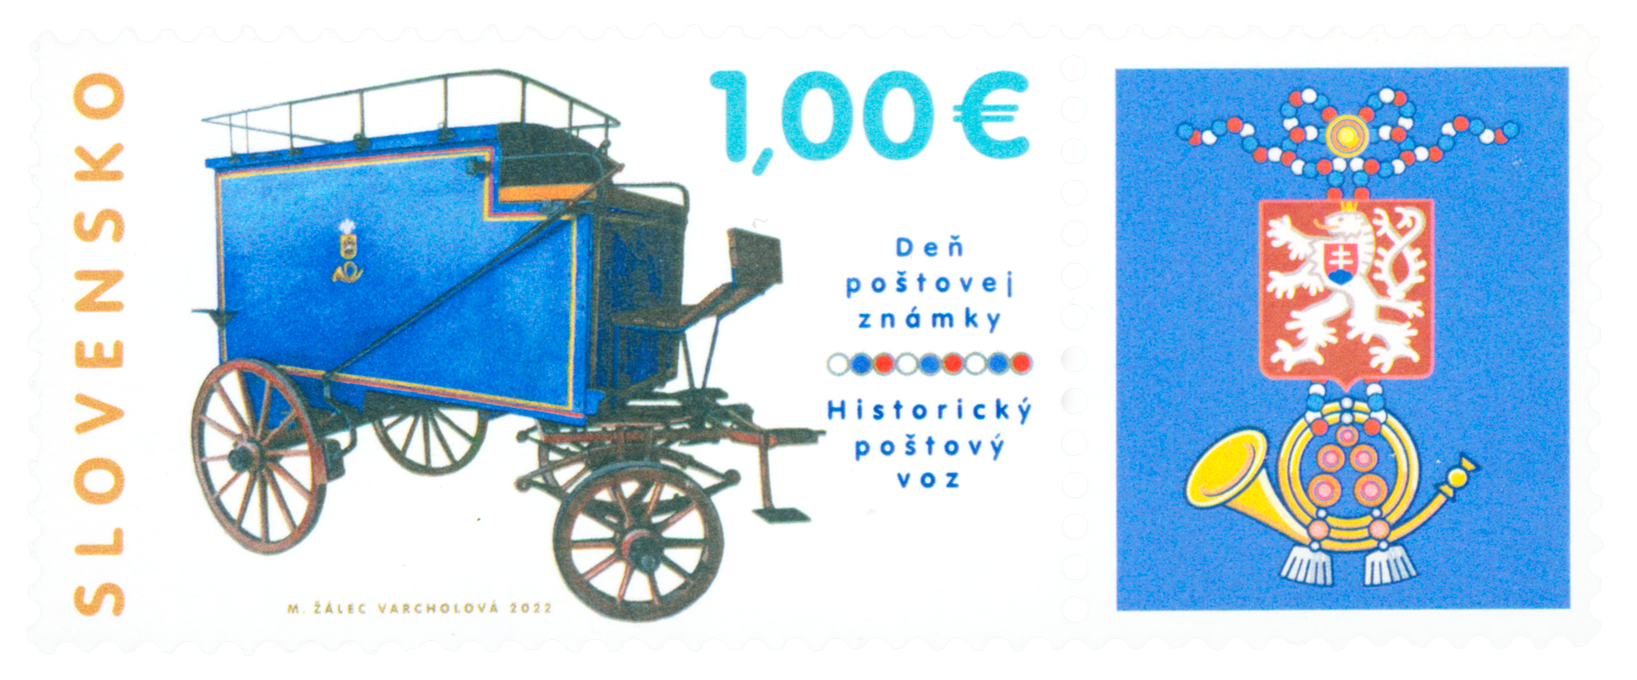 783 - Deň poštovej známky: Historický poštový voz